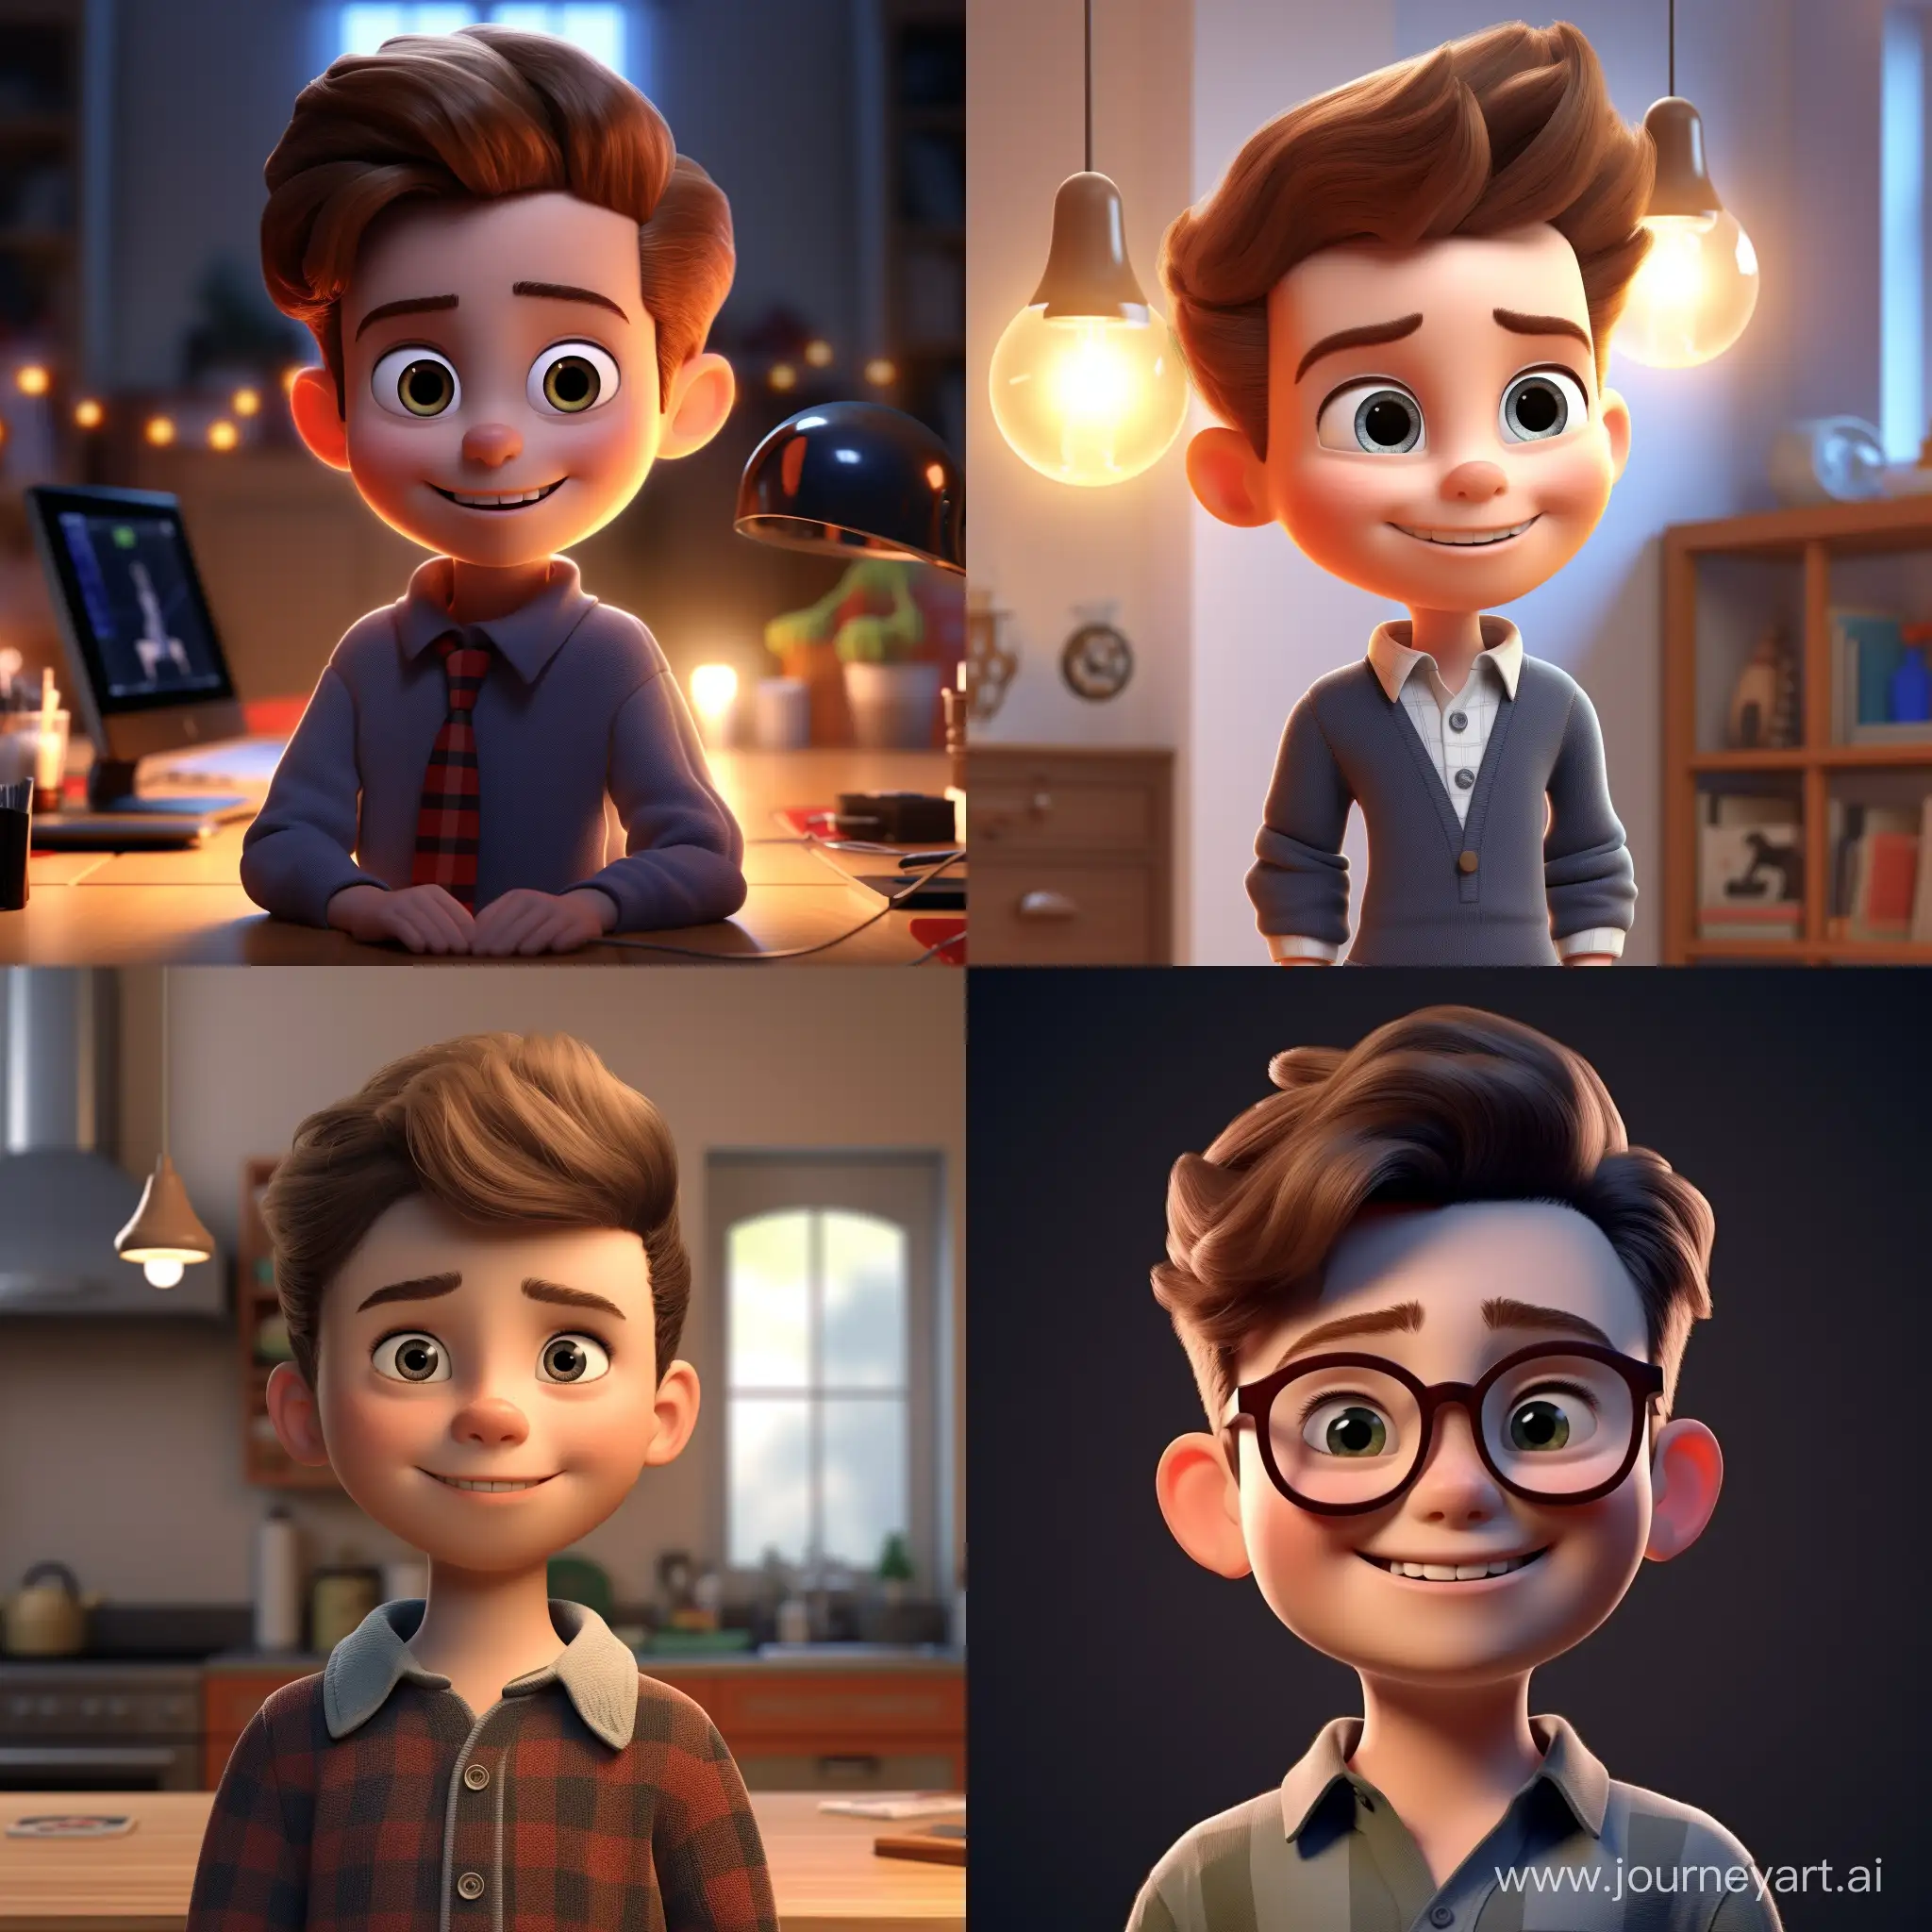 Joyful-PixarStyle-3D-Animation-Clever-Boy-with-a-Bright-Idea